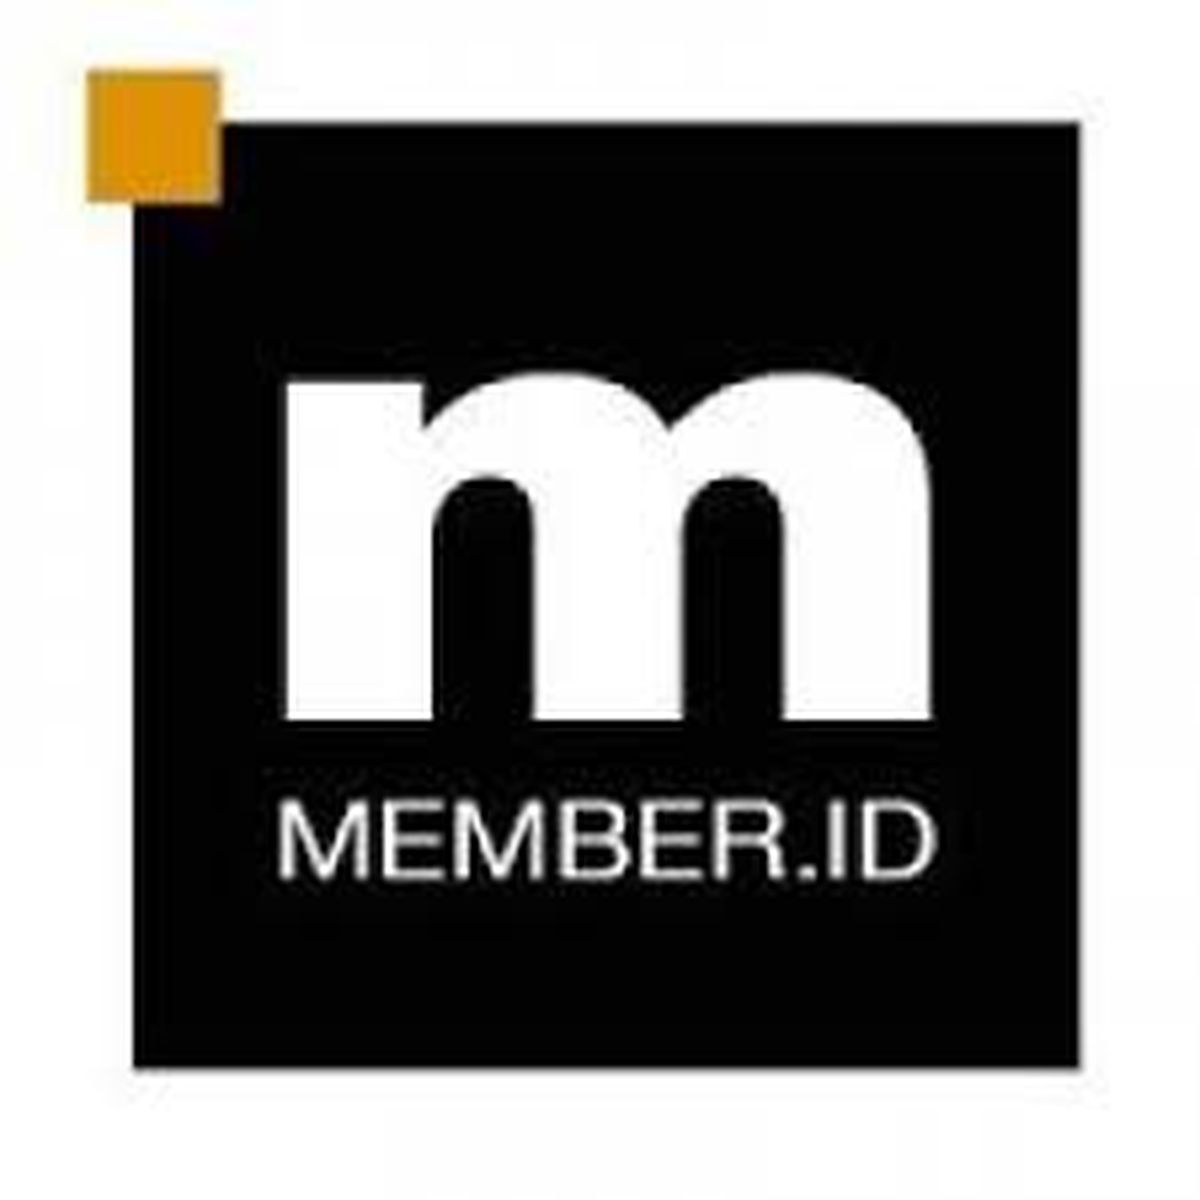 SR data компания. Member ID remit. Member id